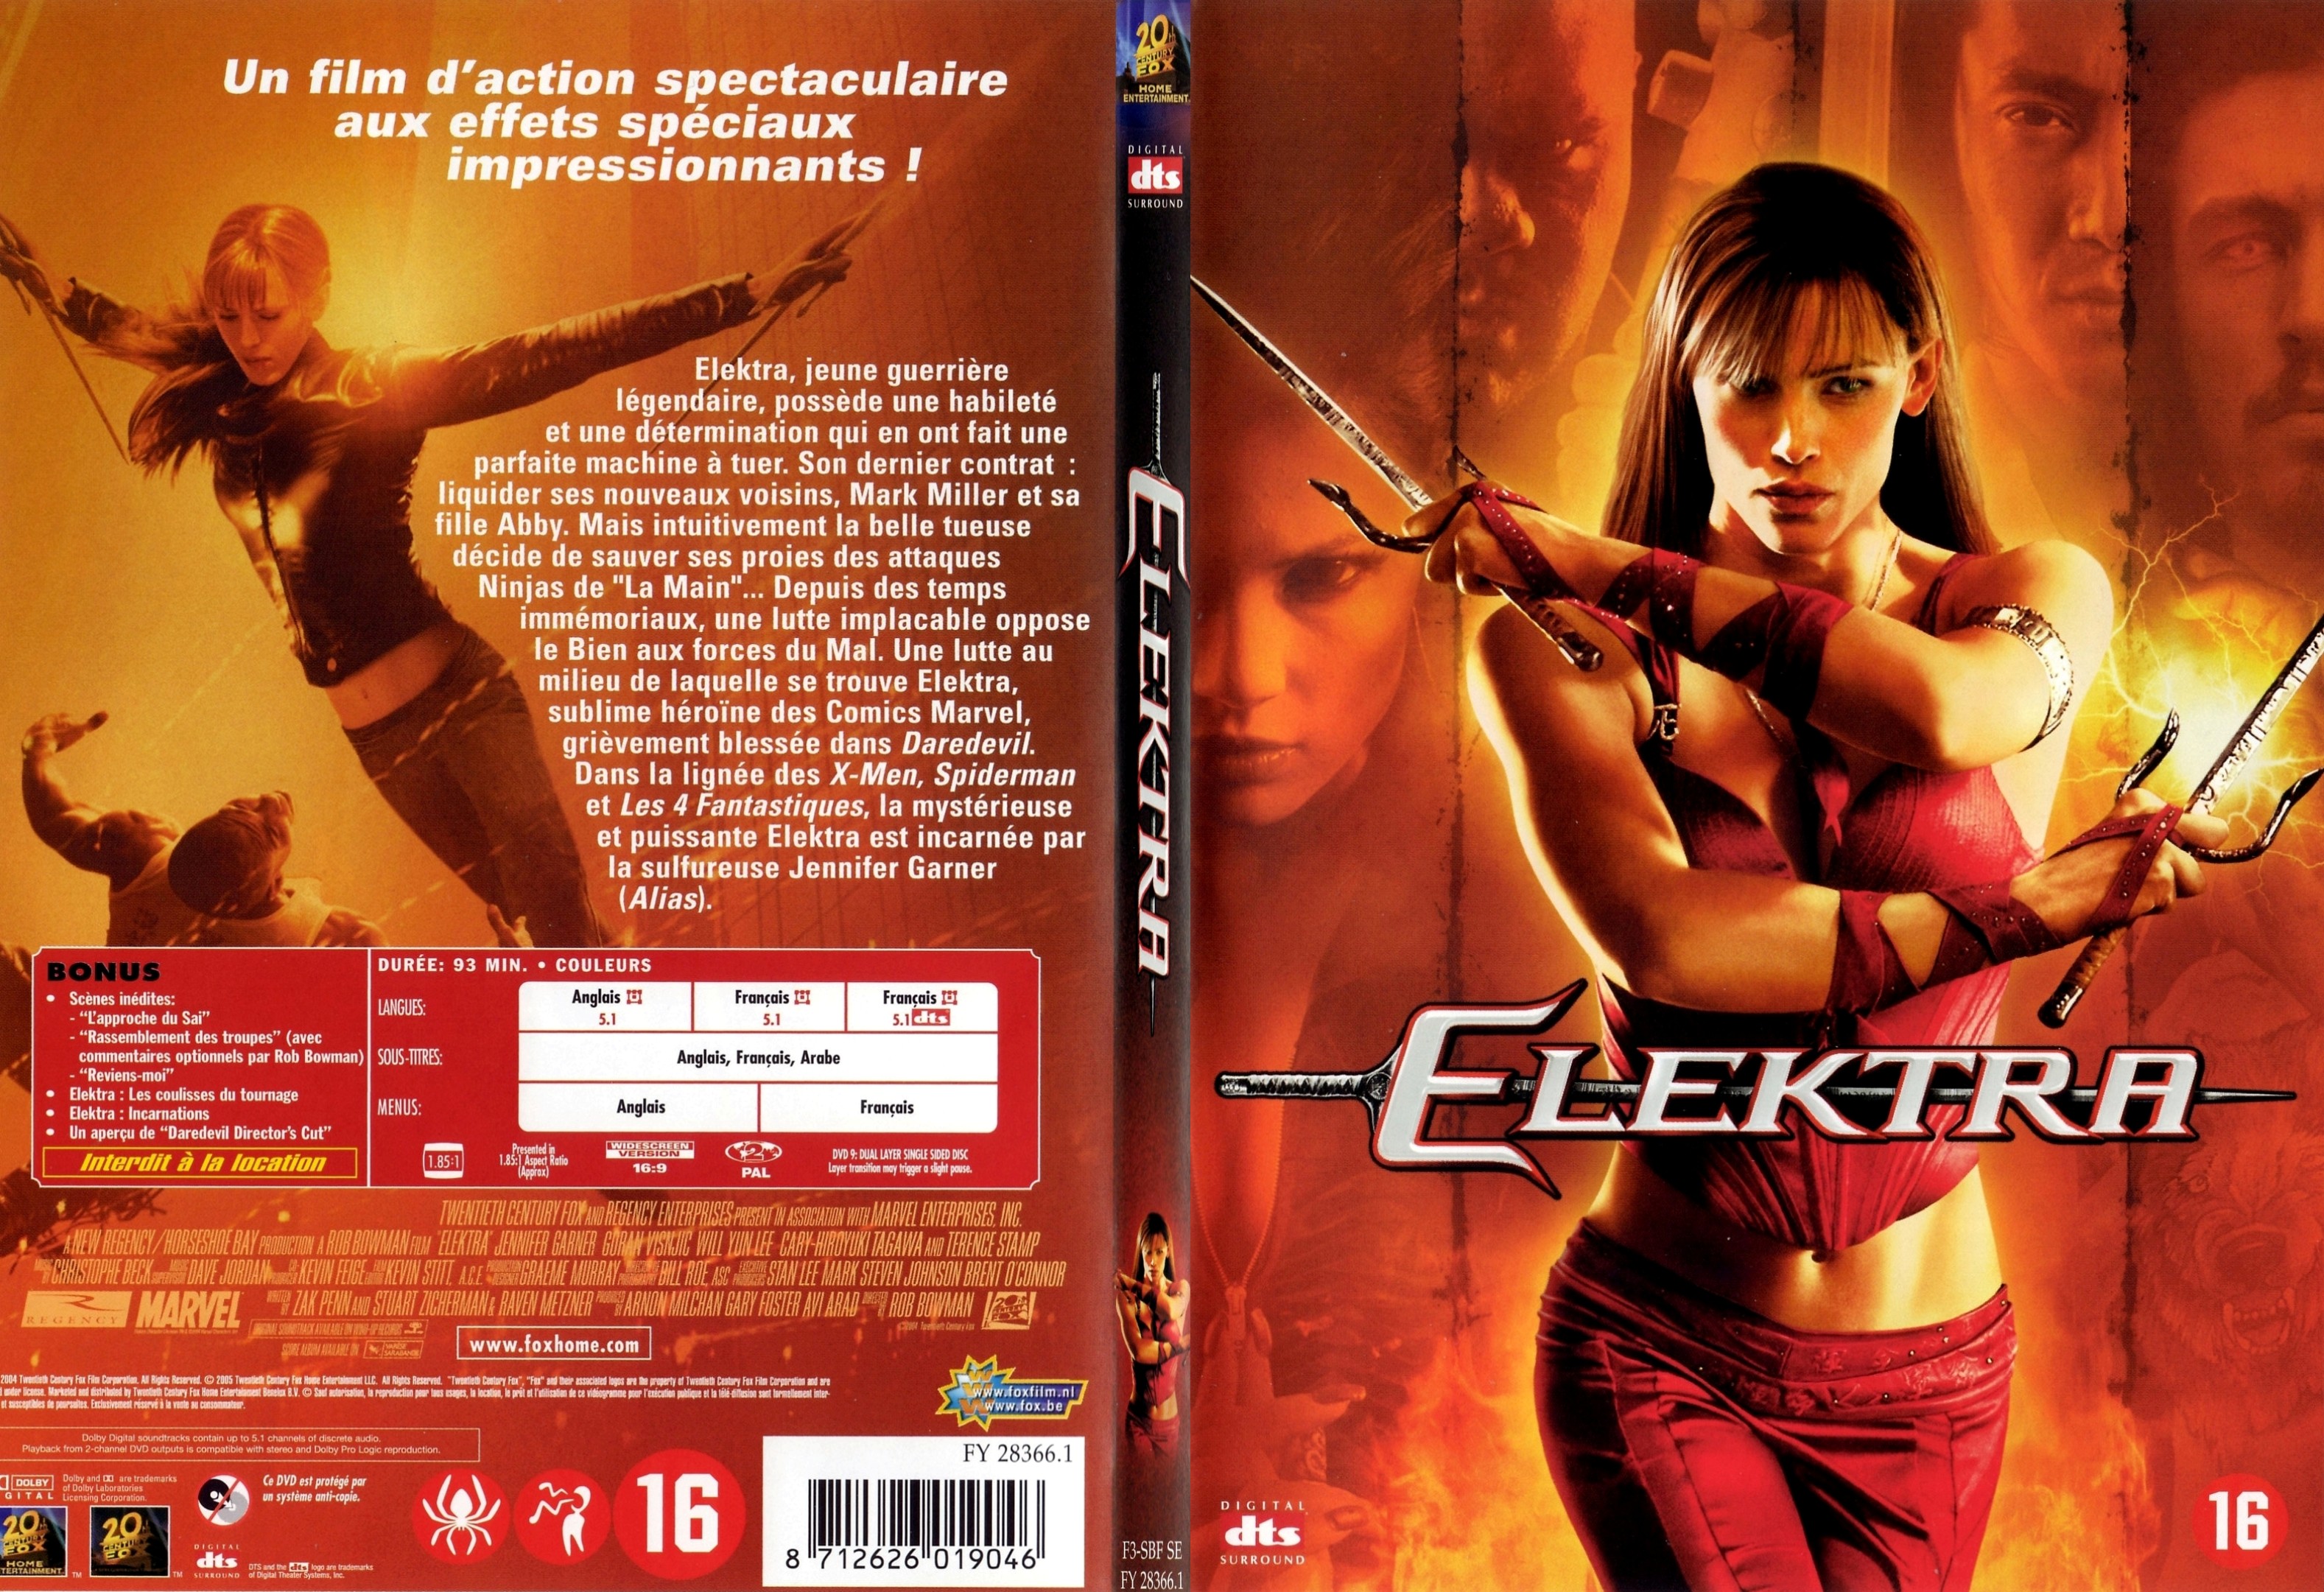 Jaquette DVD Elektra - SLIM v2